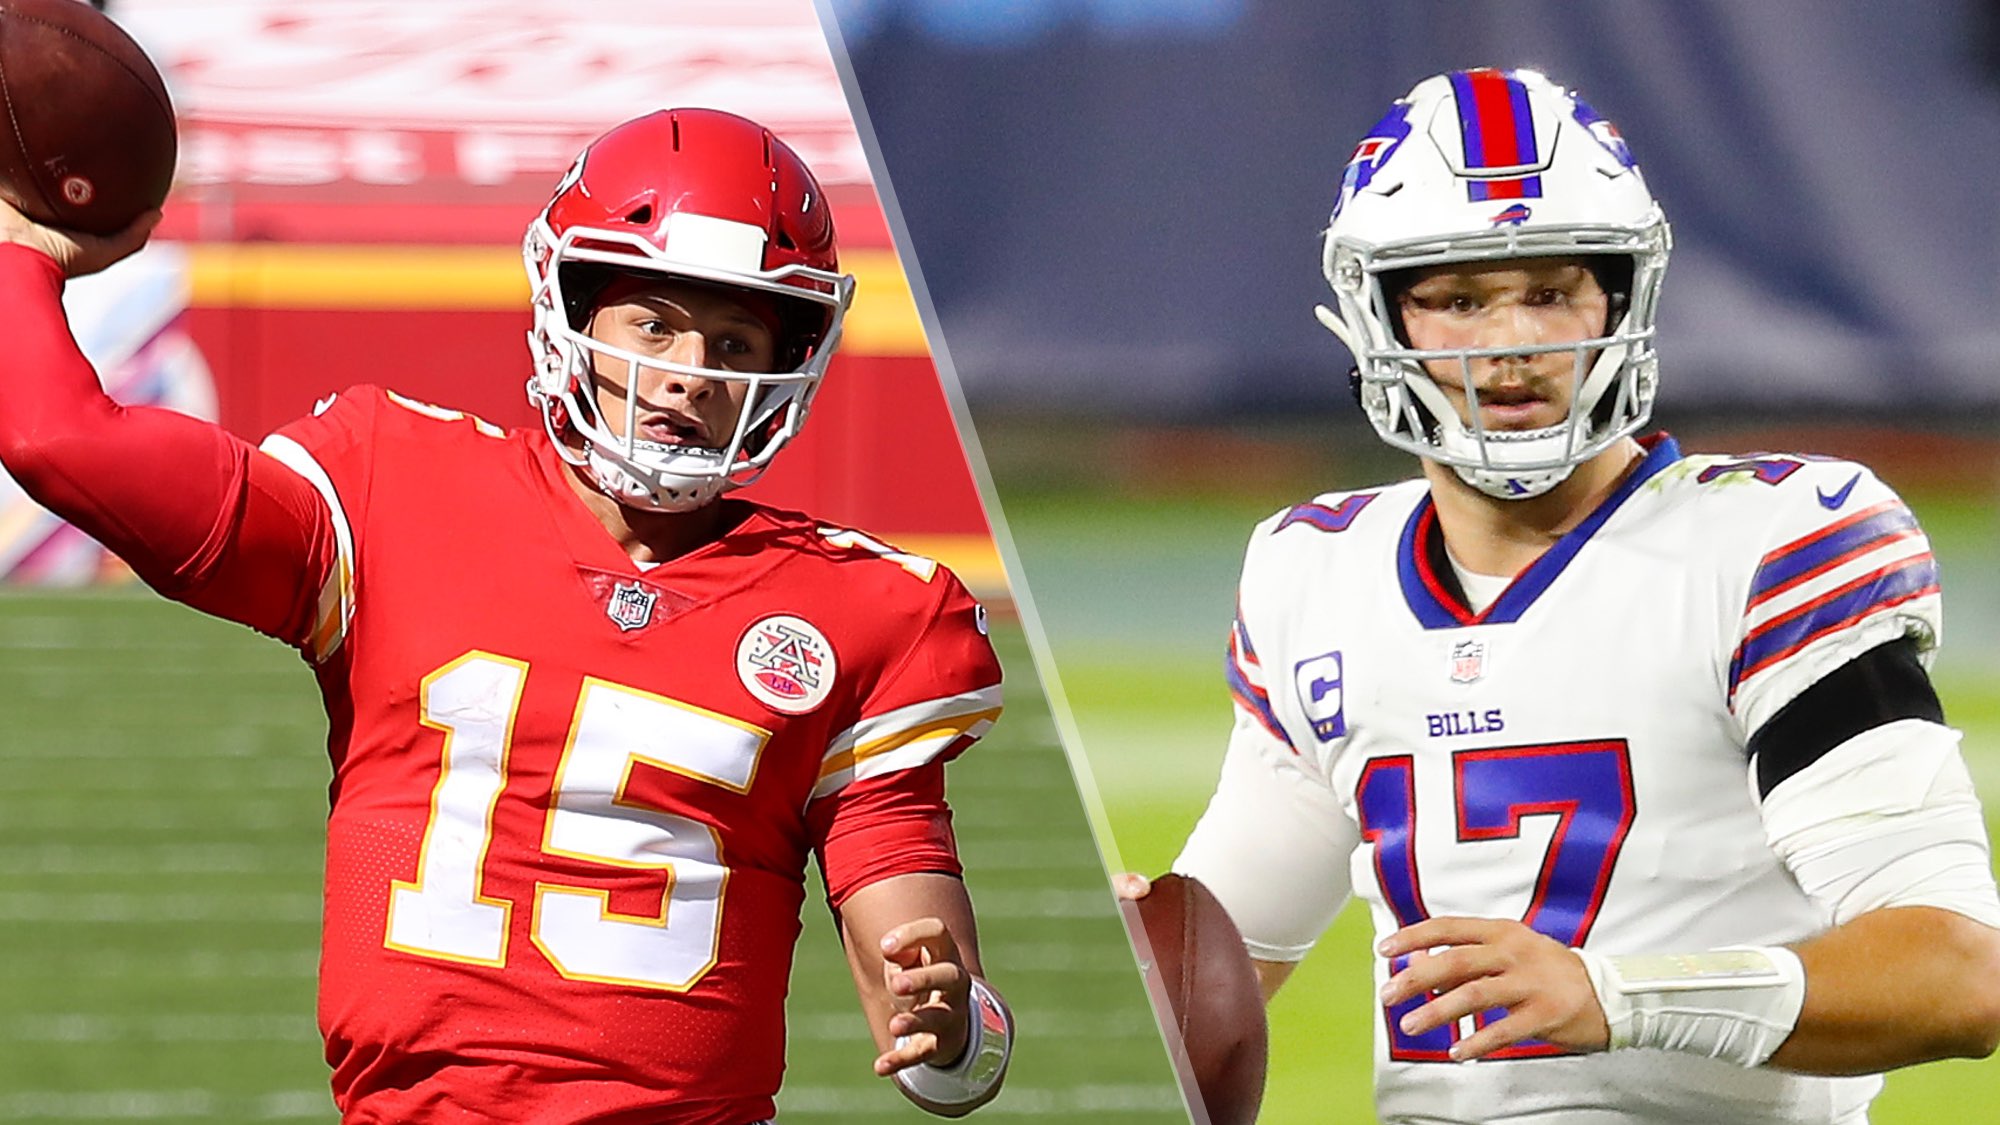 Chiefs vs Bills live stream: How to watch NFL week 6 game online